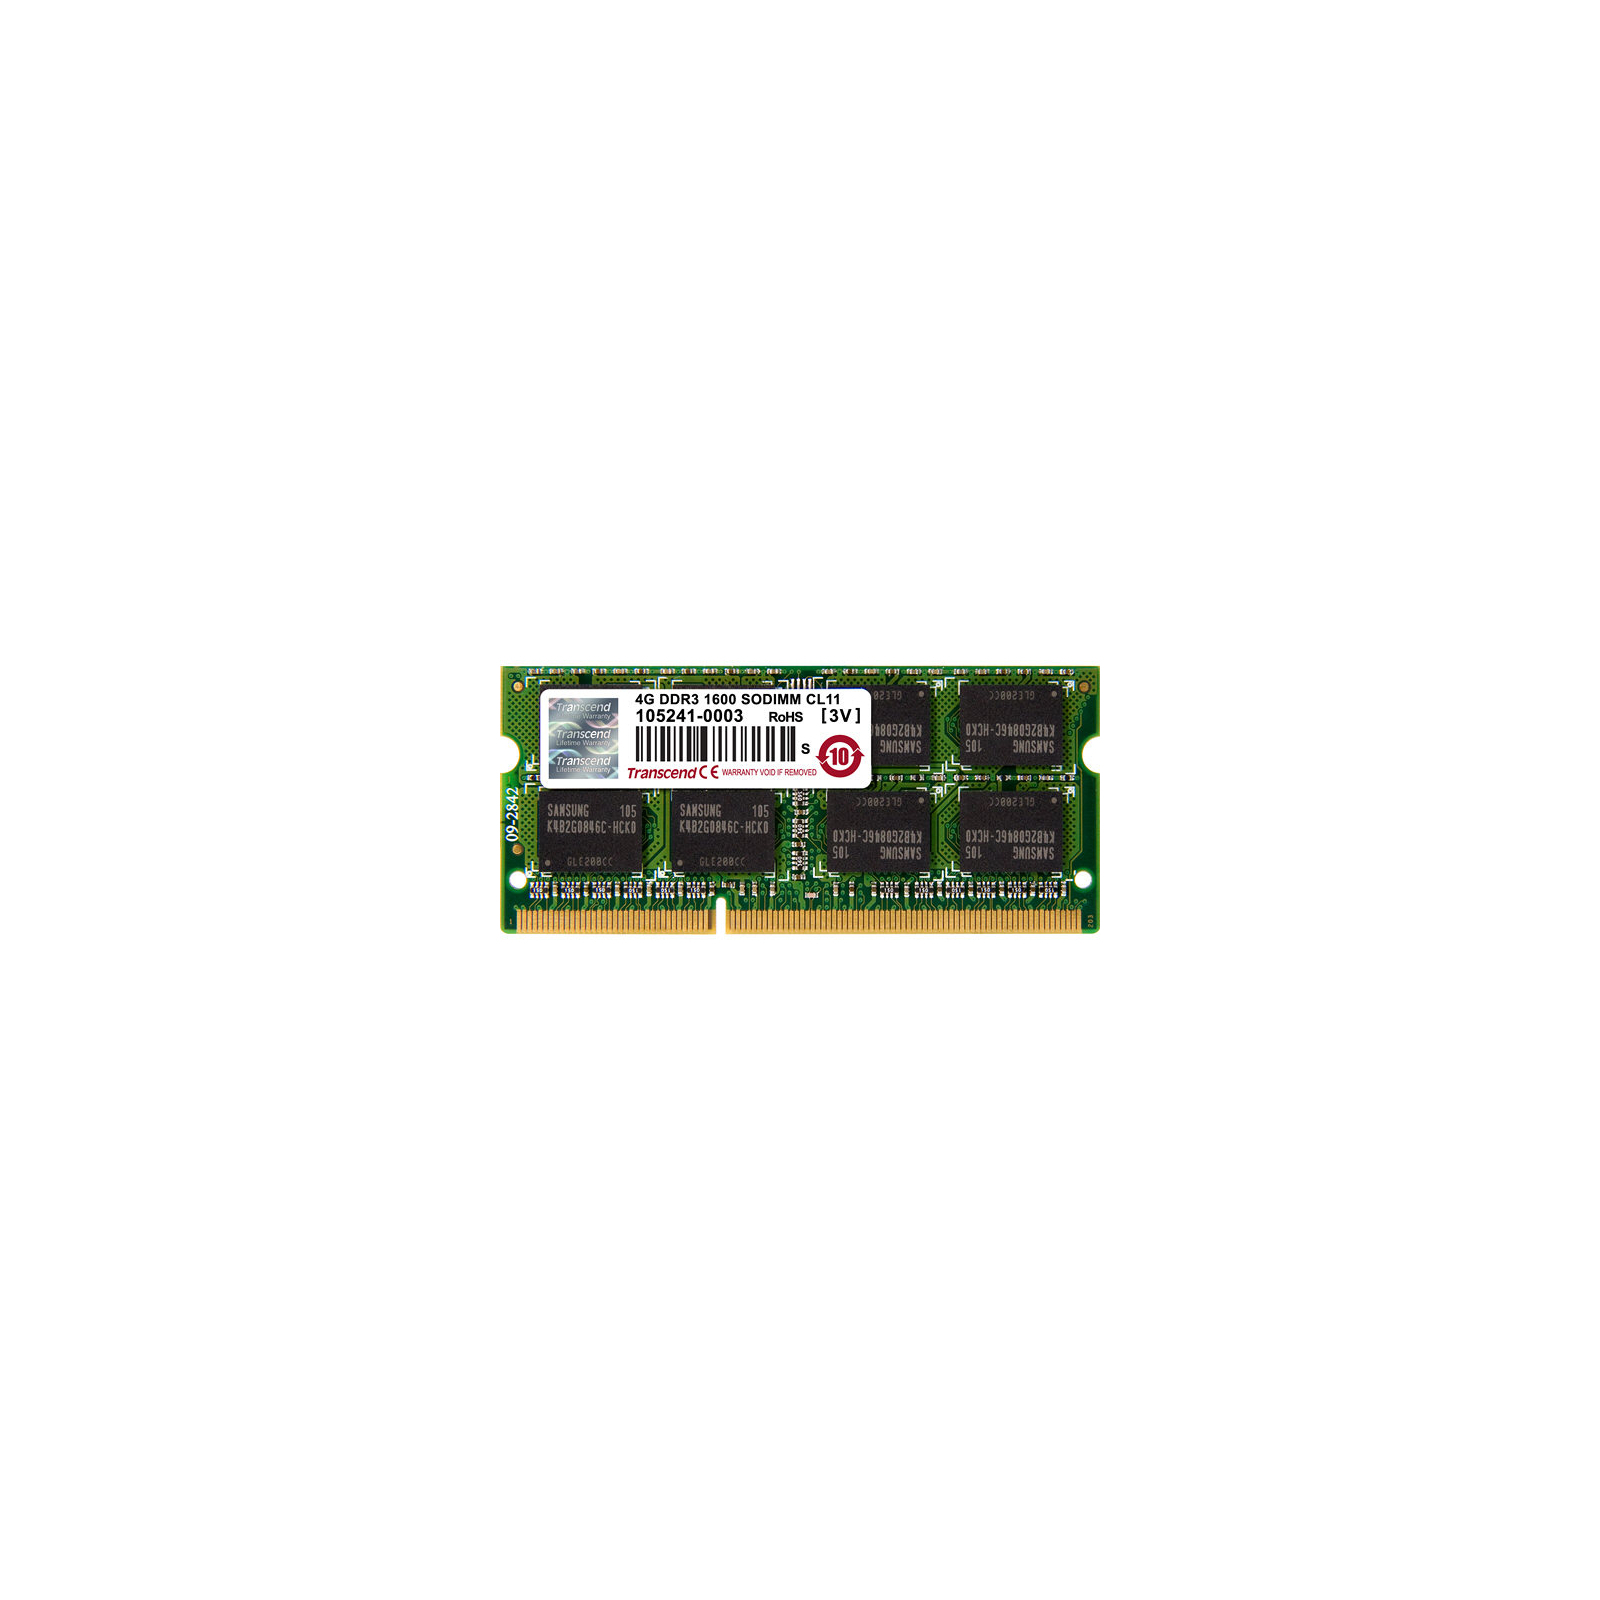 Модуль памяти для ноутбука SoDIMM DDR3 4GB 1600 MHz Transcend (TS512MSK64V6H)